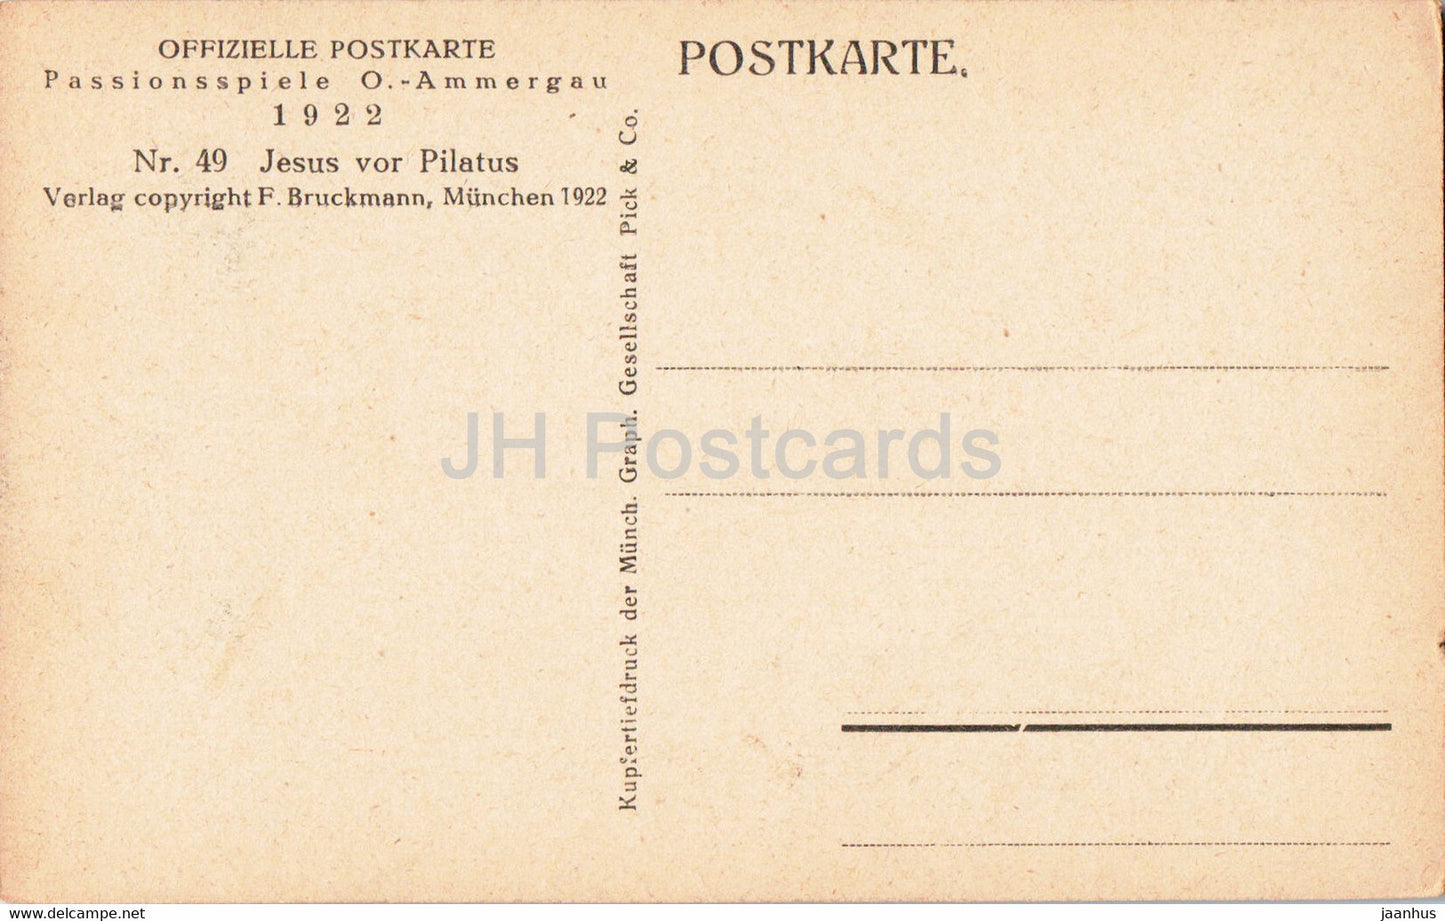 Passionsspiele O Ammergau 1922 - Jesus Vor Pilatus - actors - theatre - old postcard - Germany - unused